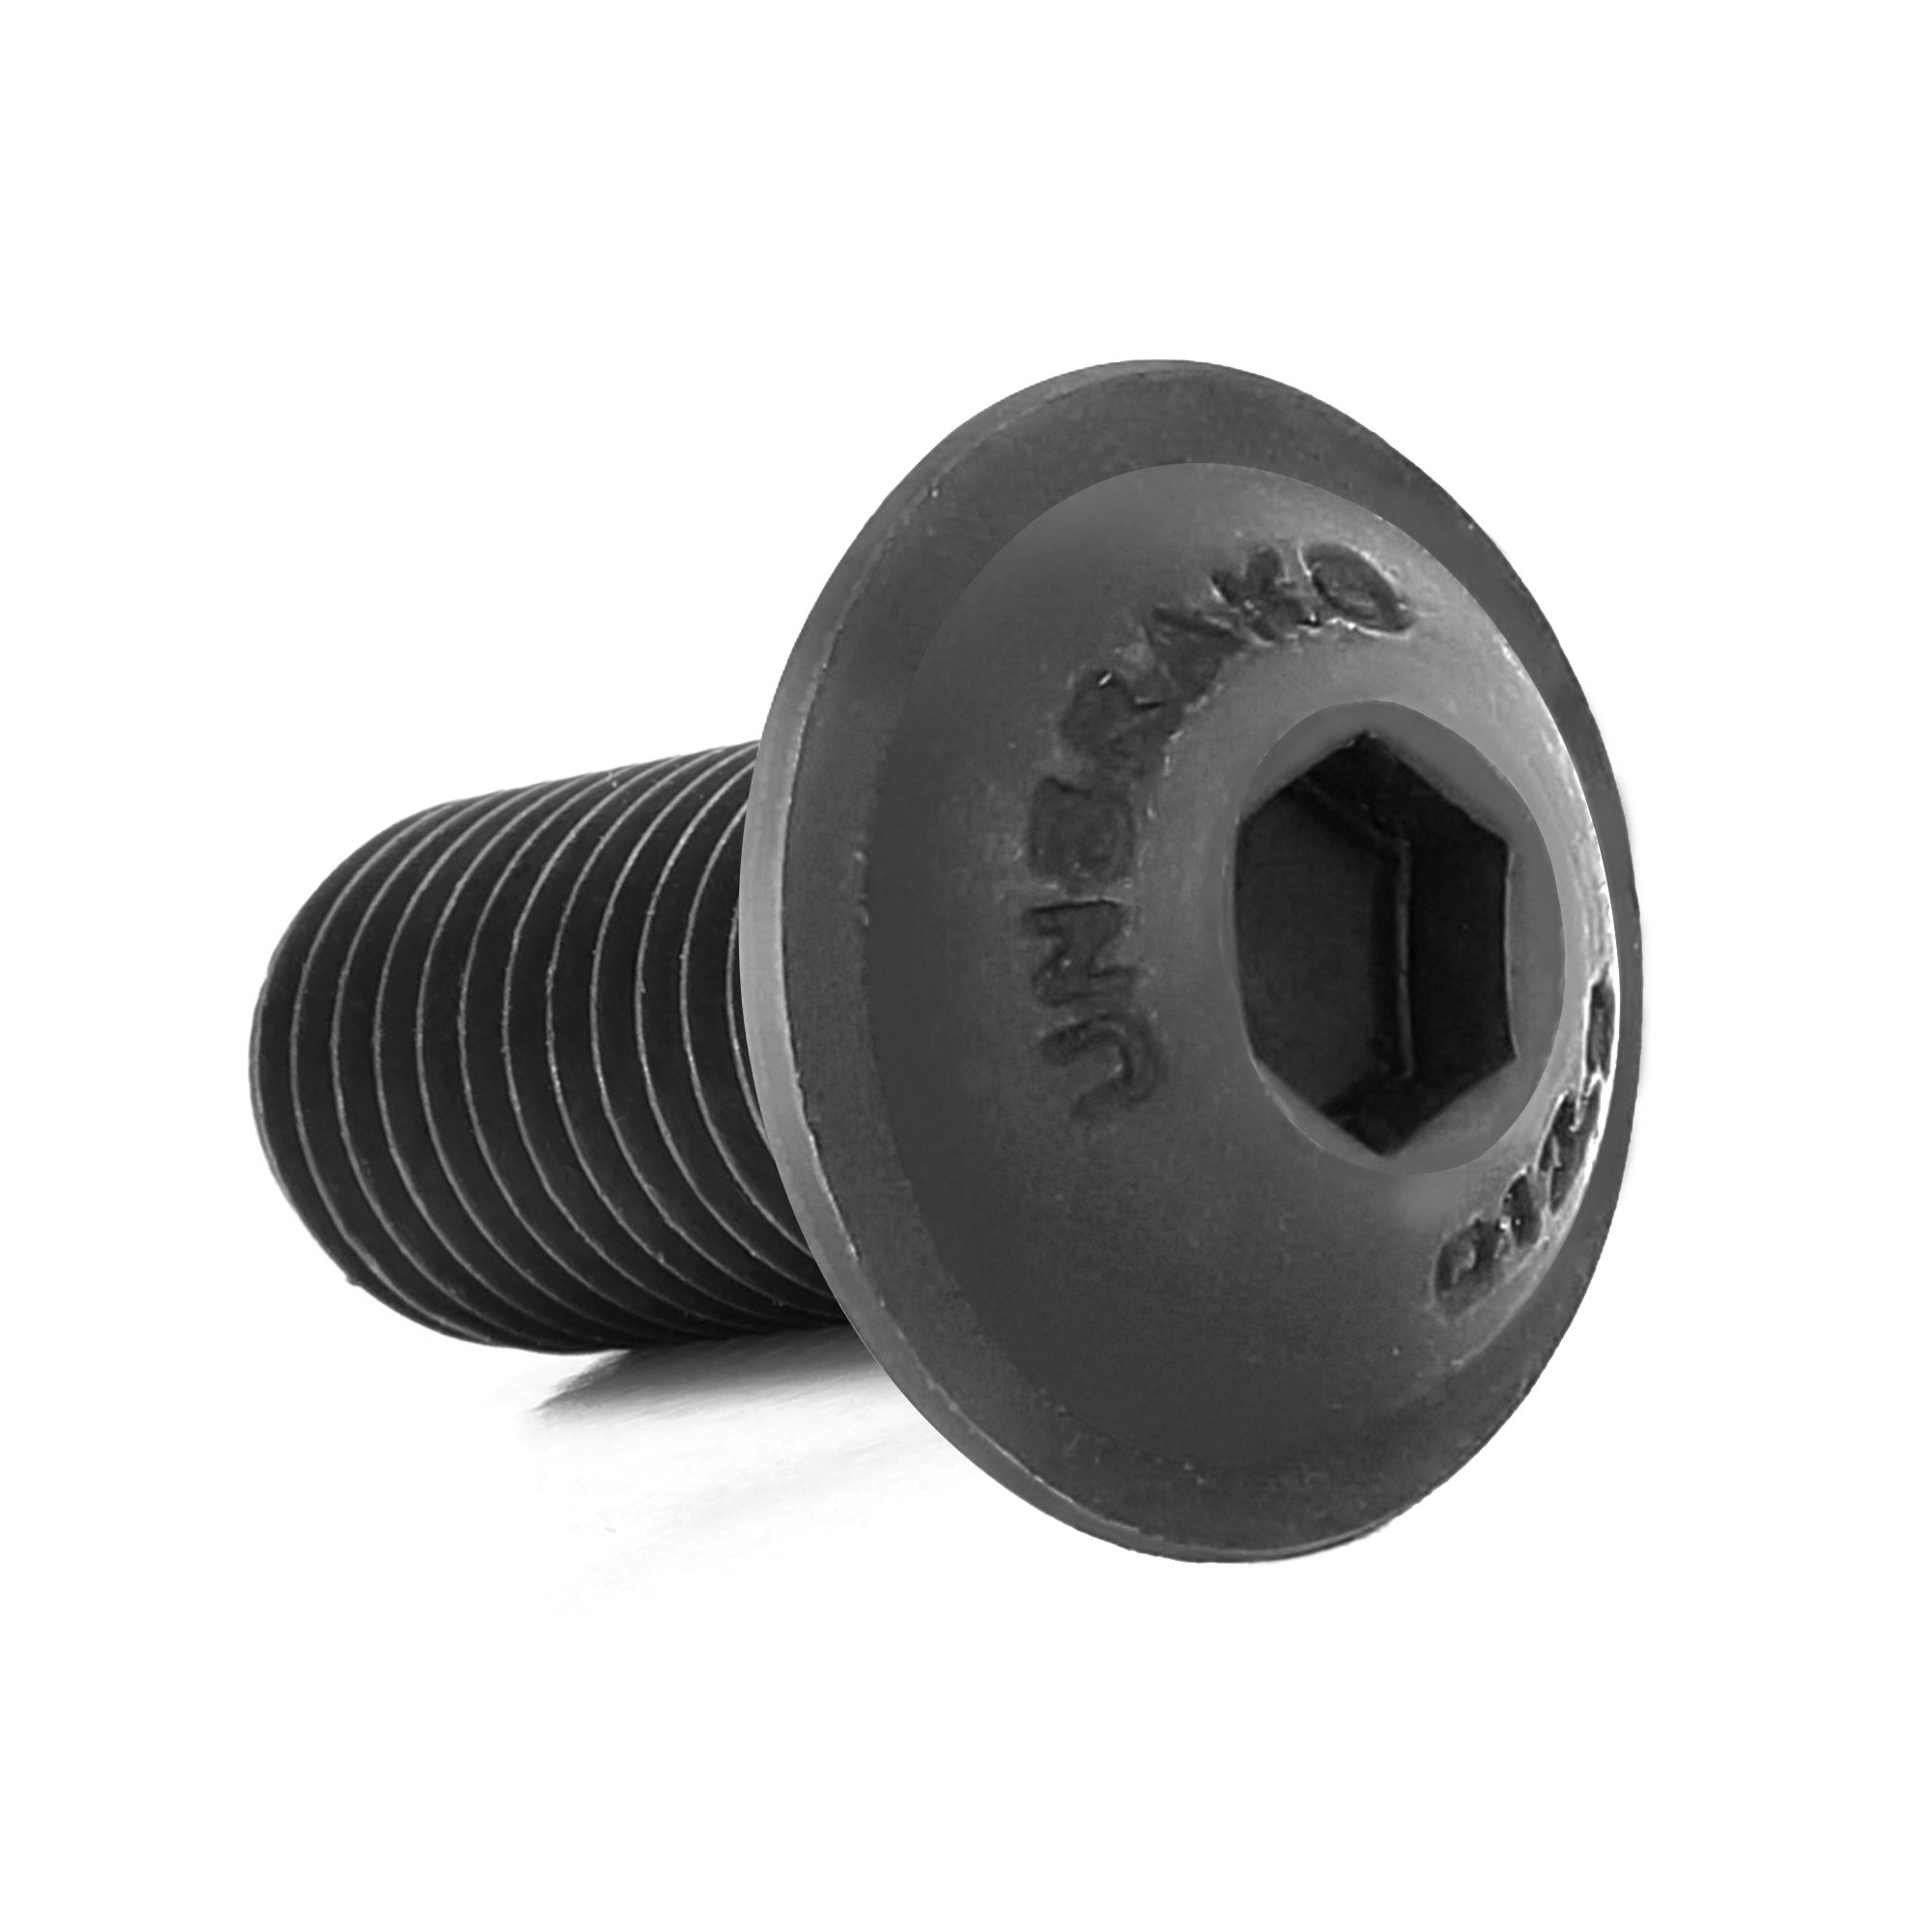 M6-1x10 ISO 7380 Alloy Steel Flange Button Hd Socket Cap Screw Full Thrd Black Oxide (Unbrako)